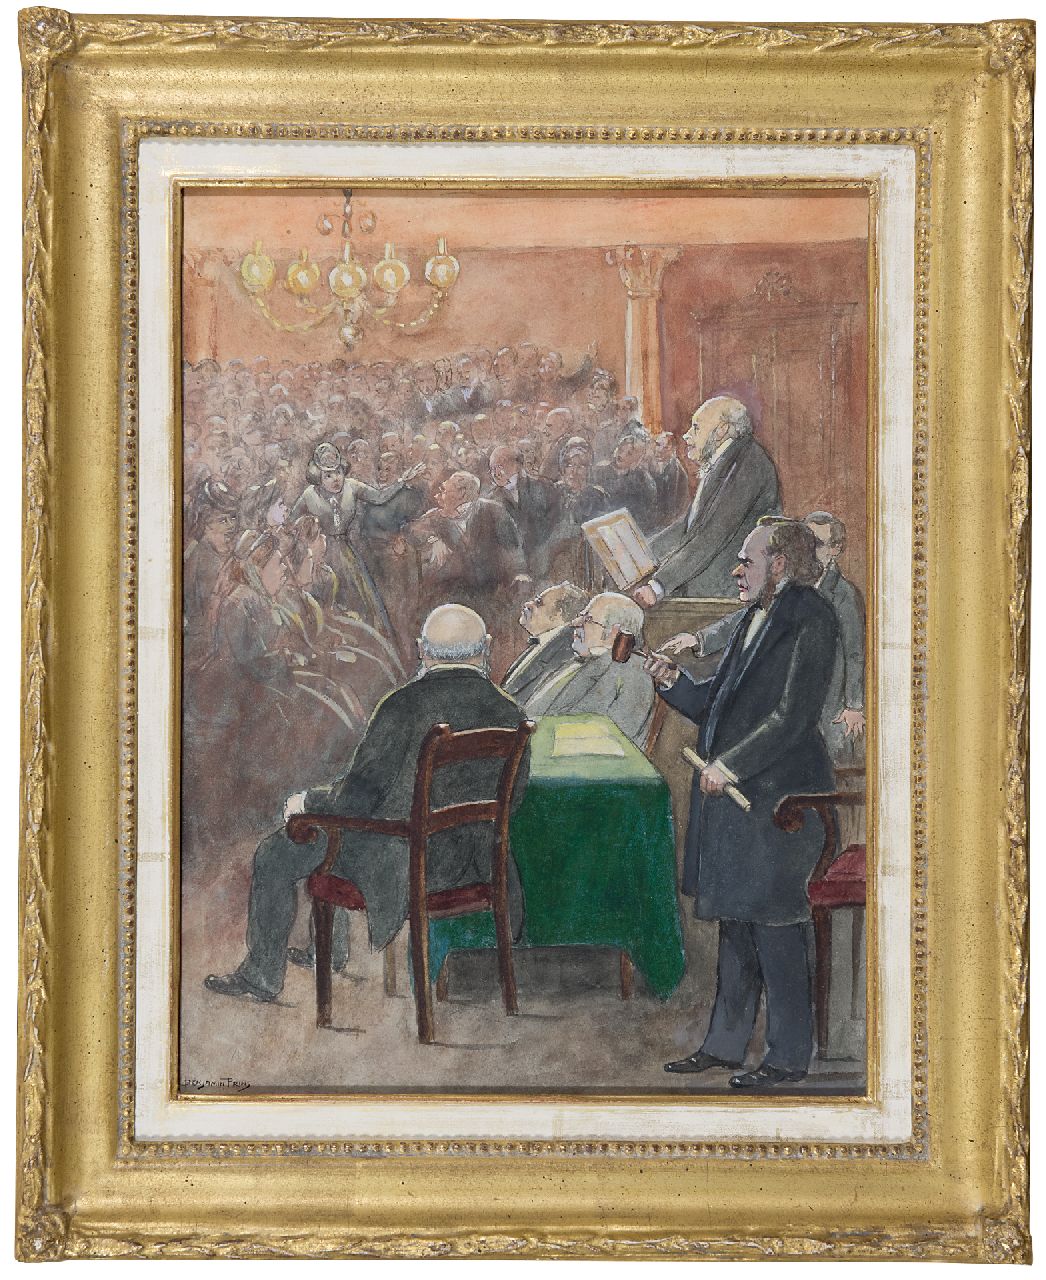 Prins B.L.  | 'Benjamin' Liepman Prins, The interruption, watercolour on paper 29.5 x 21.4 cm, signed l.l